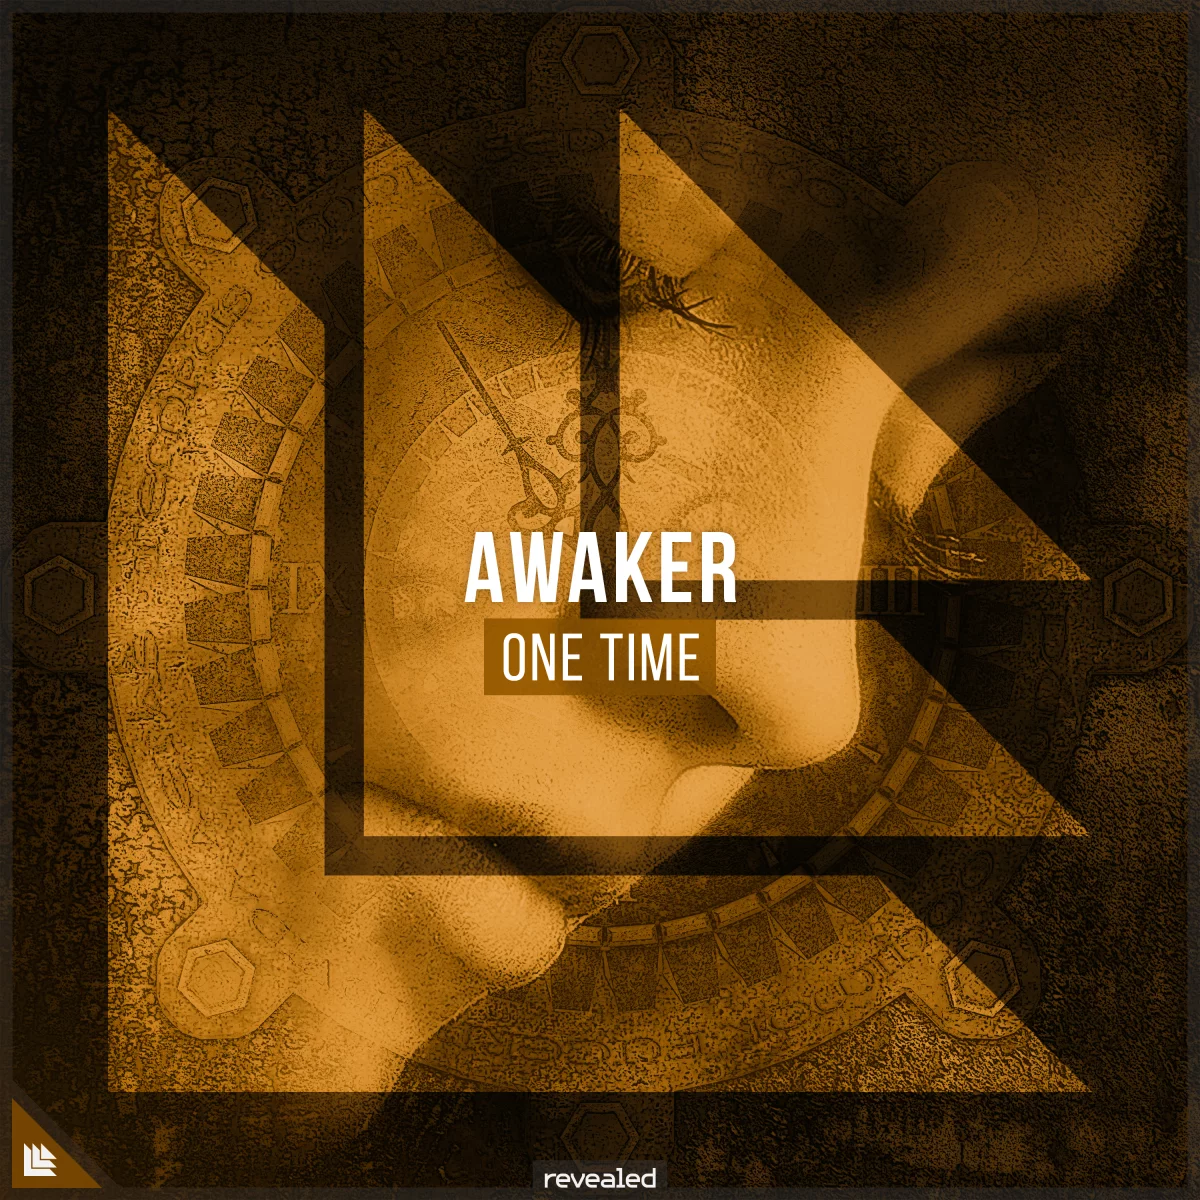 One time - Awaker⁠ 